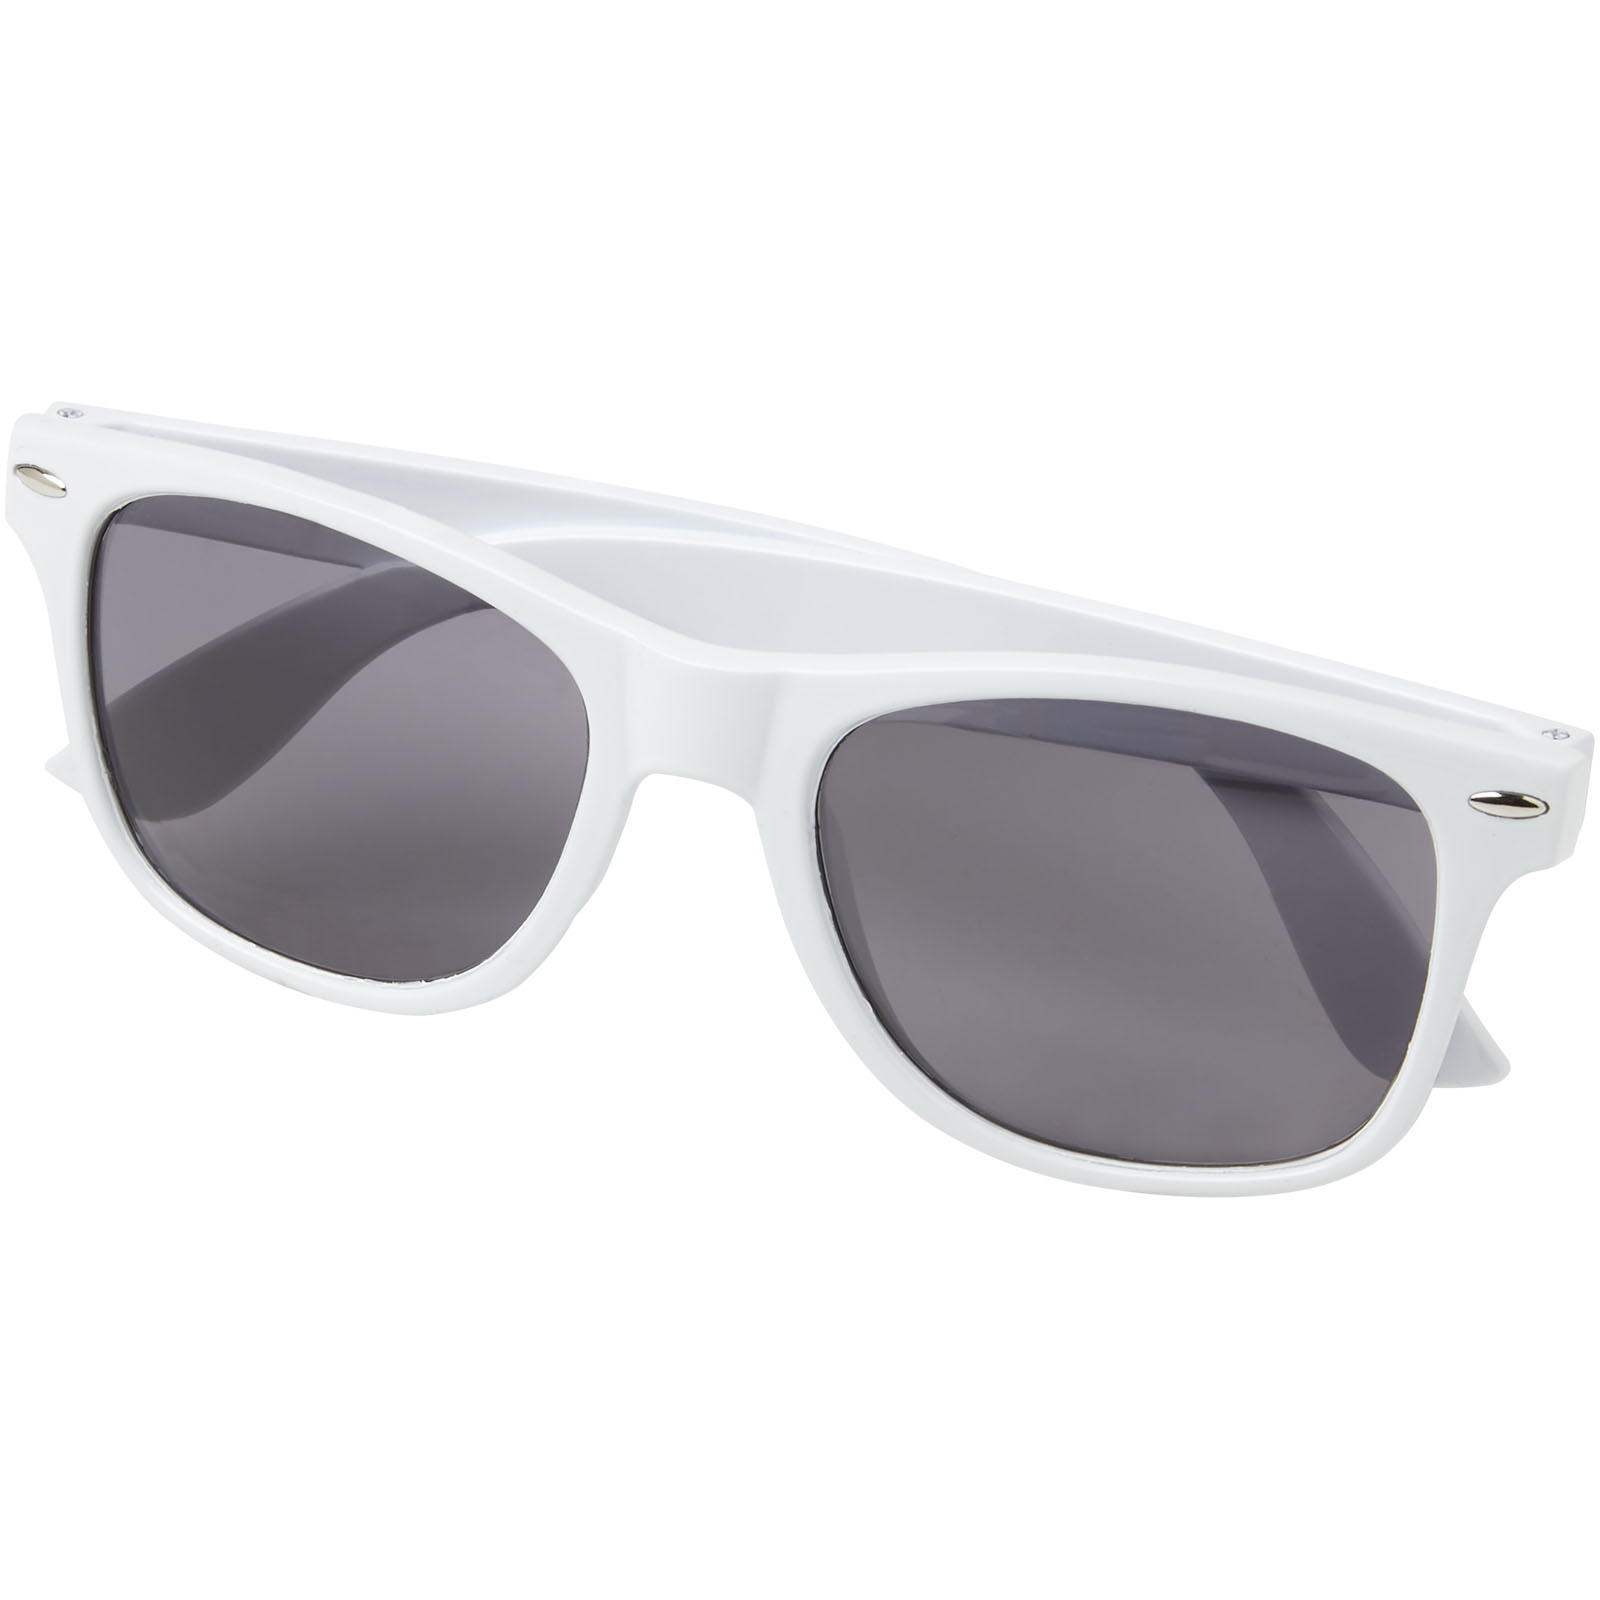 Advertising Sunglasses - Sun Ray rPET sunglasses - 2